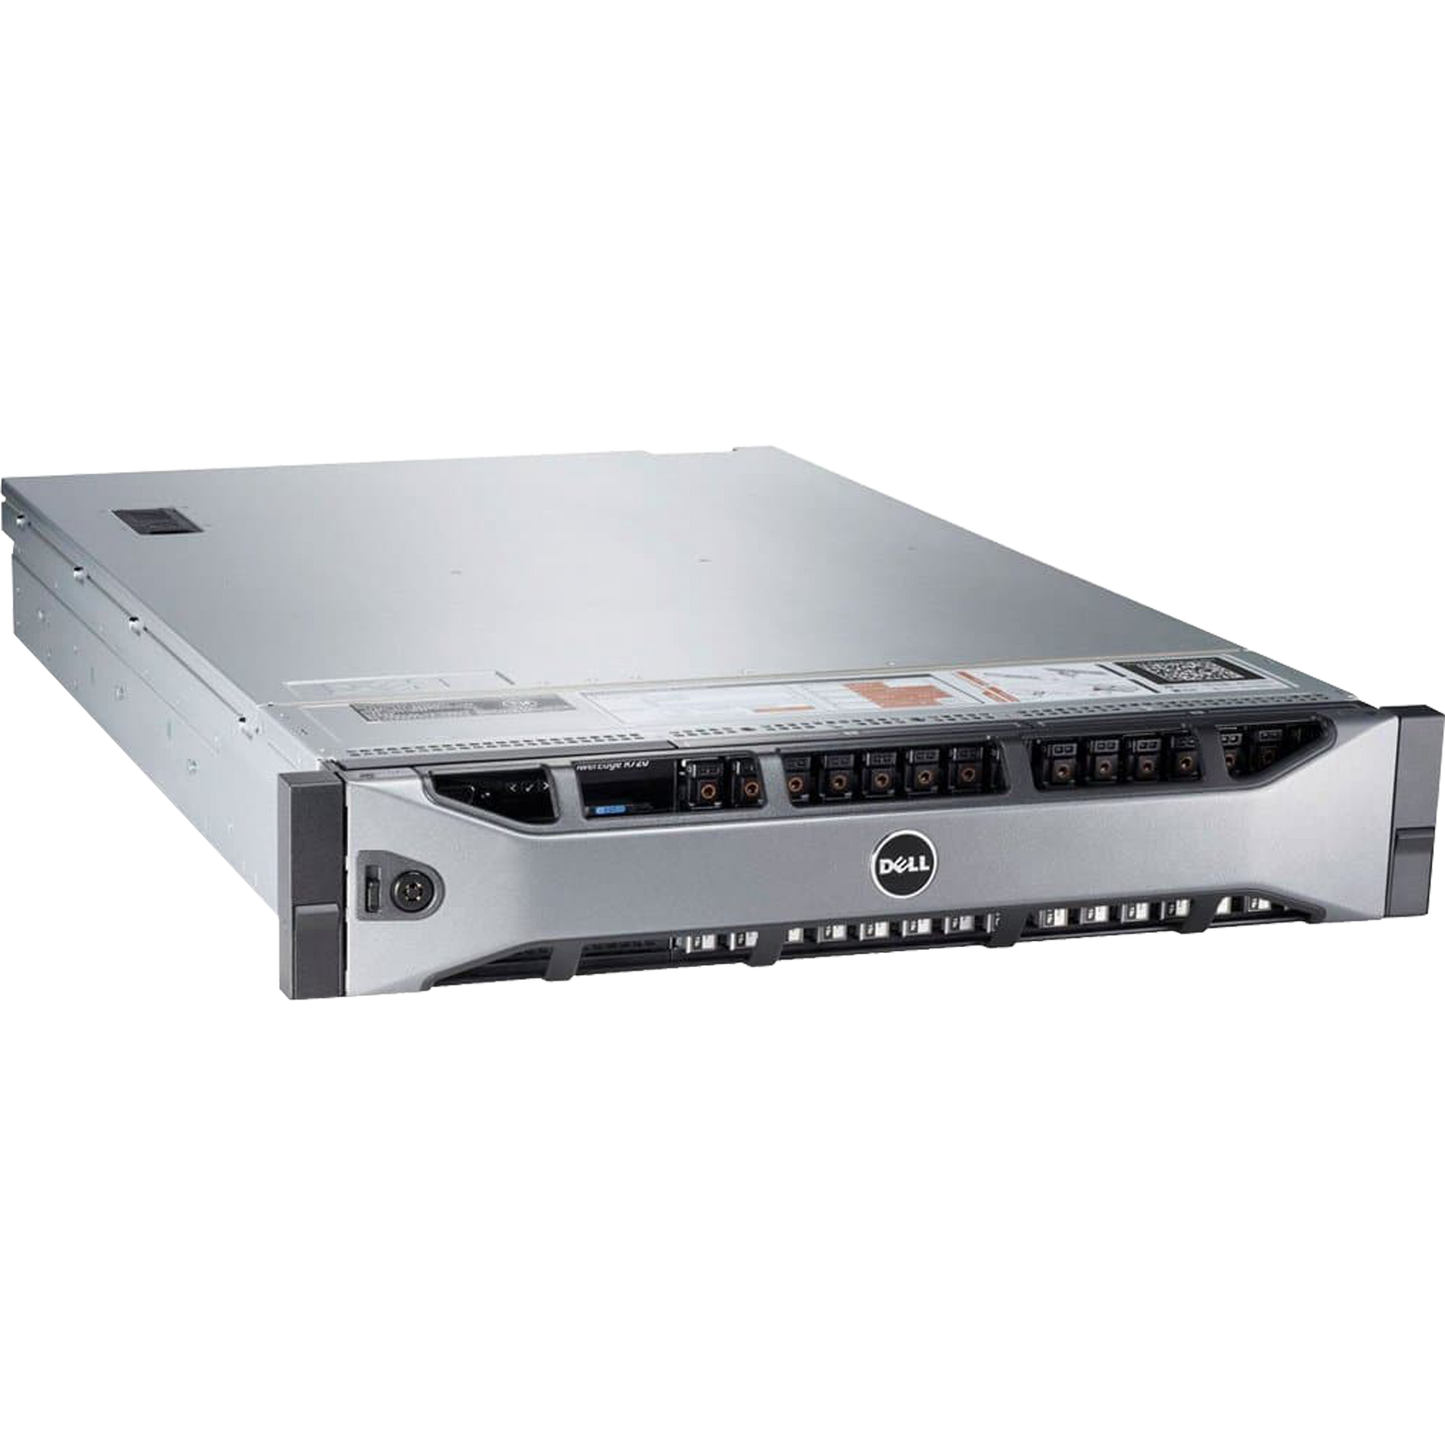 Dell PowerEdge R720 2 x 6 Core Intel Xeon CPU Server - 2.5" Backplane Servers